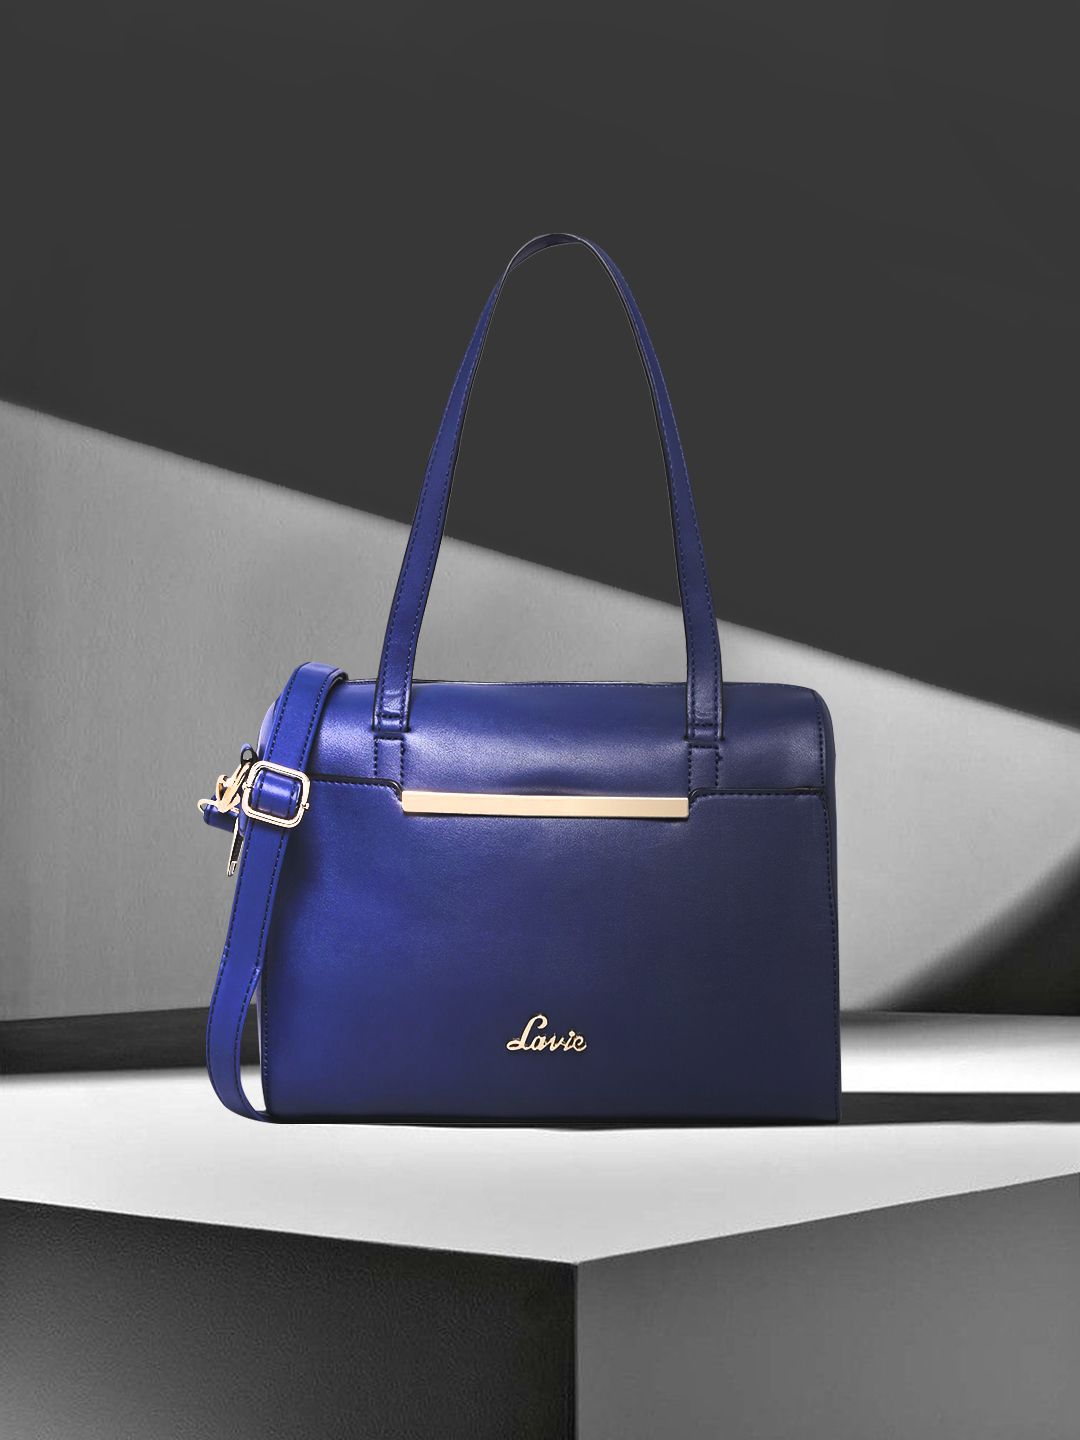 Lavie Navy Blue Solid Shoulder Bag Price in India